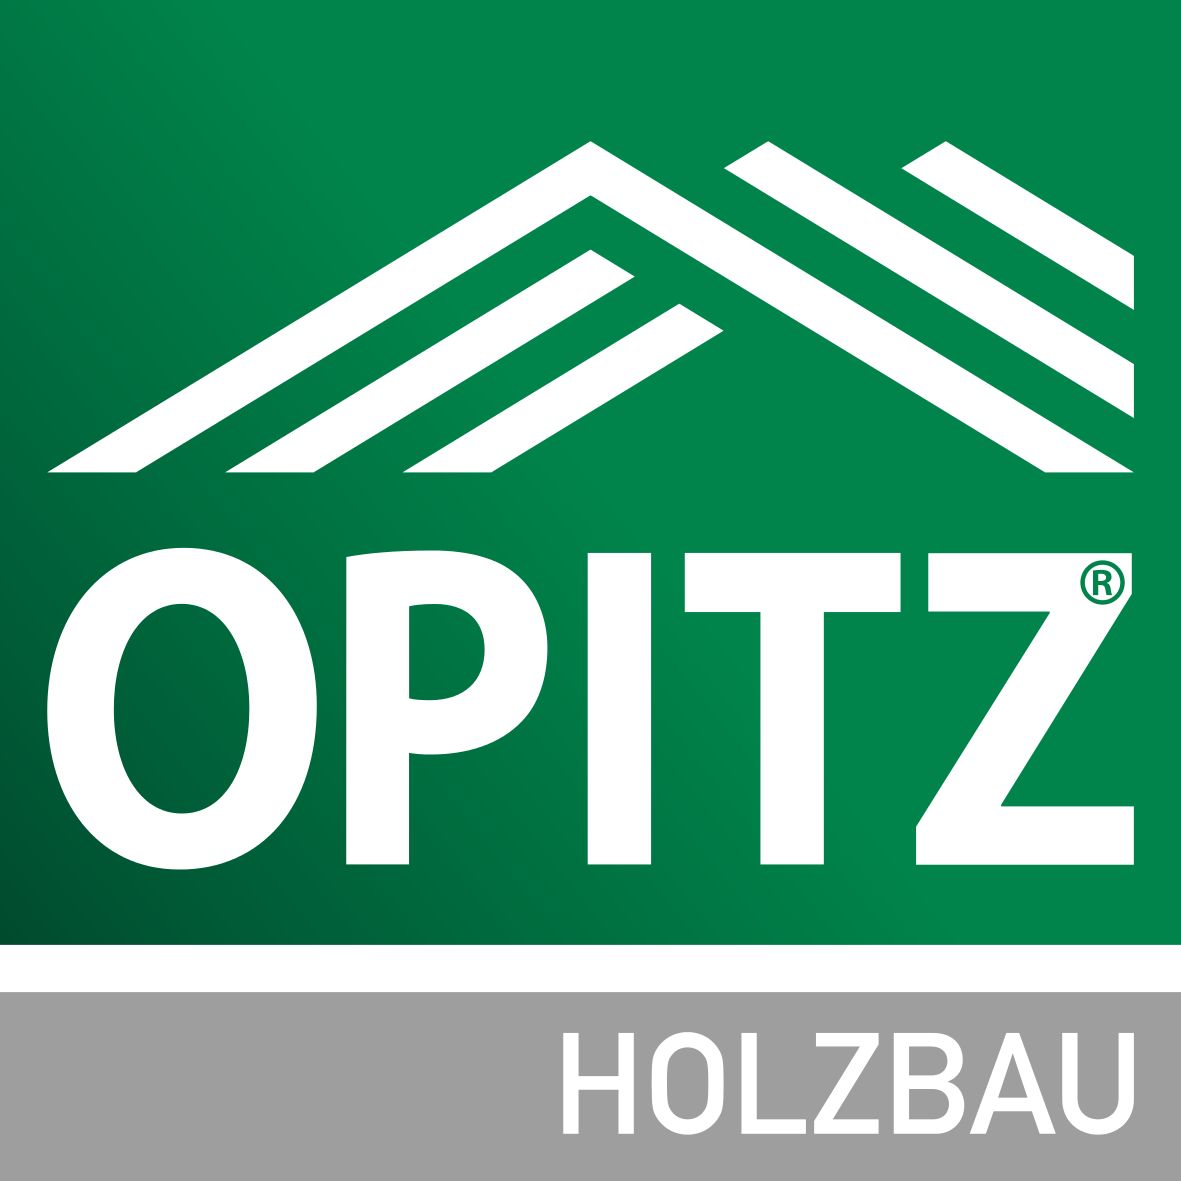 OPITZ - Holzbau